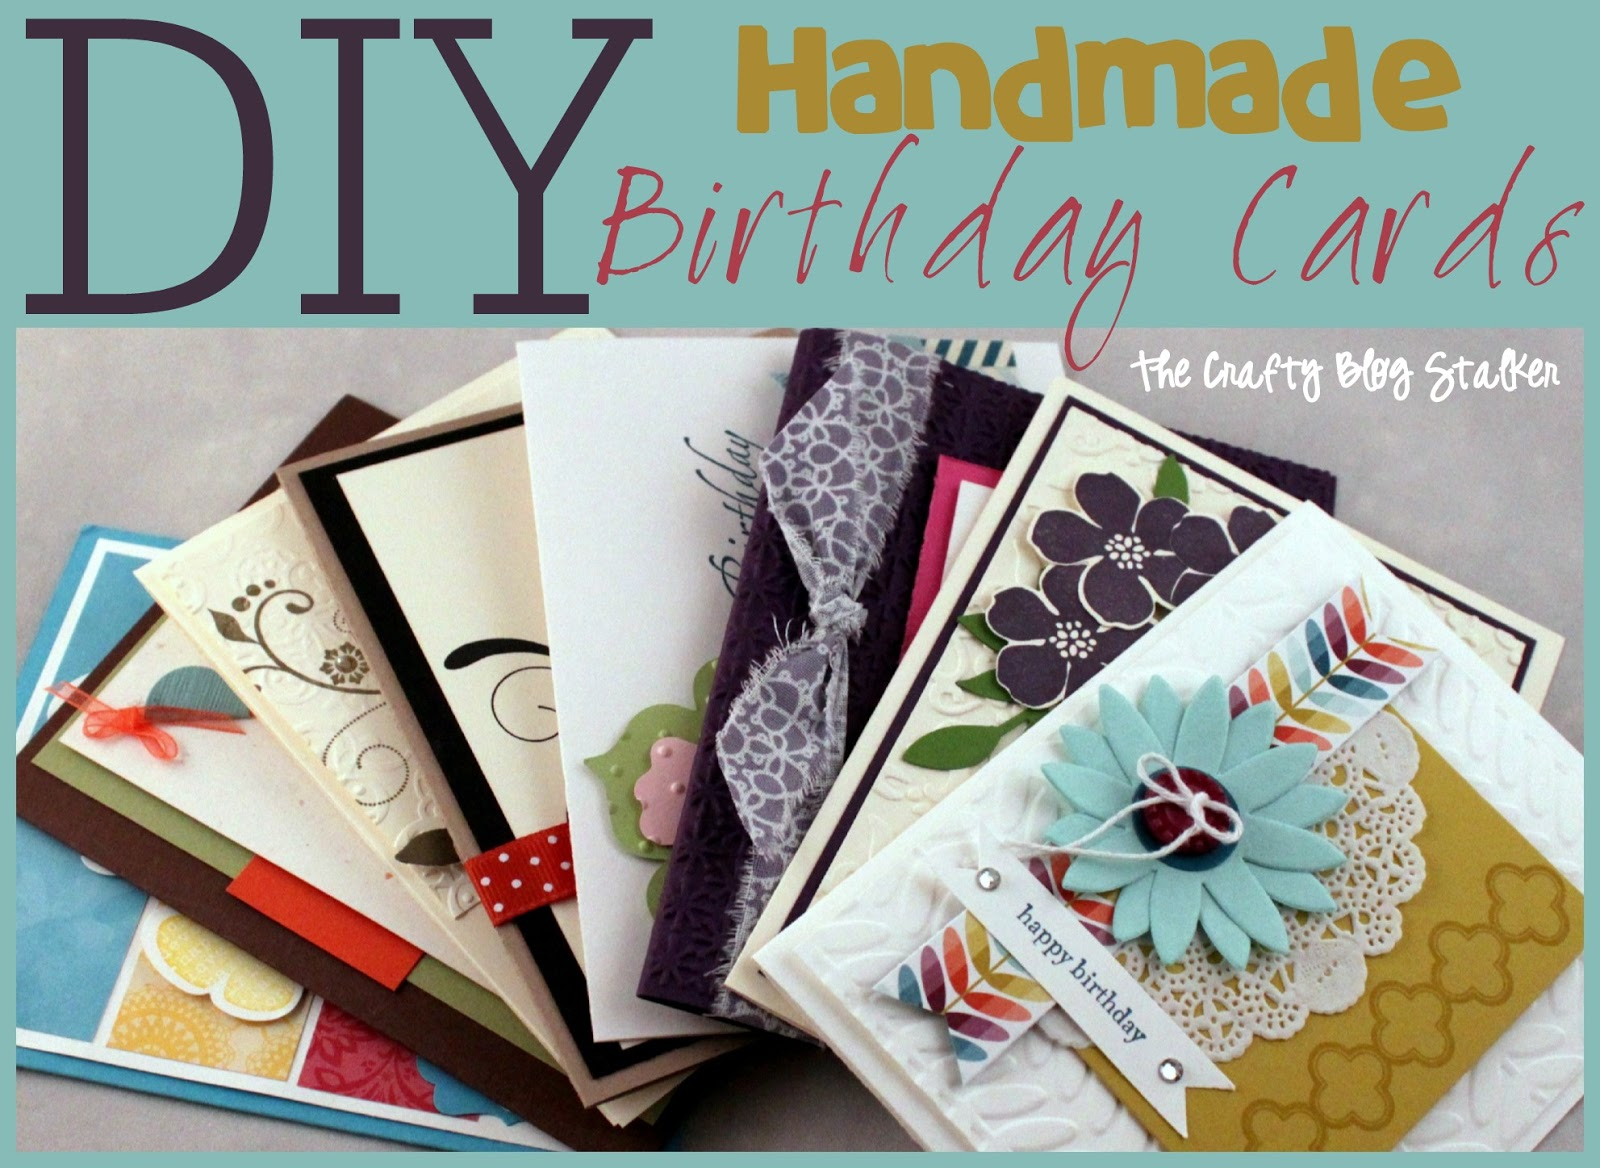 Cool Handmade Birthday Card Ideas Handmade Birthday Card Ideas The Crafty Blog Stalker